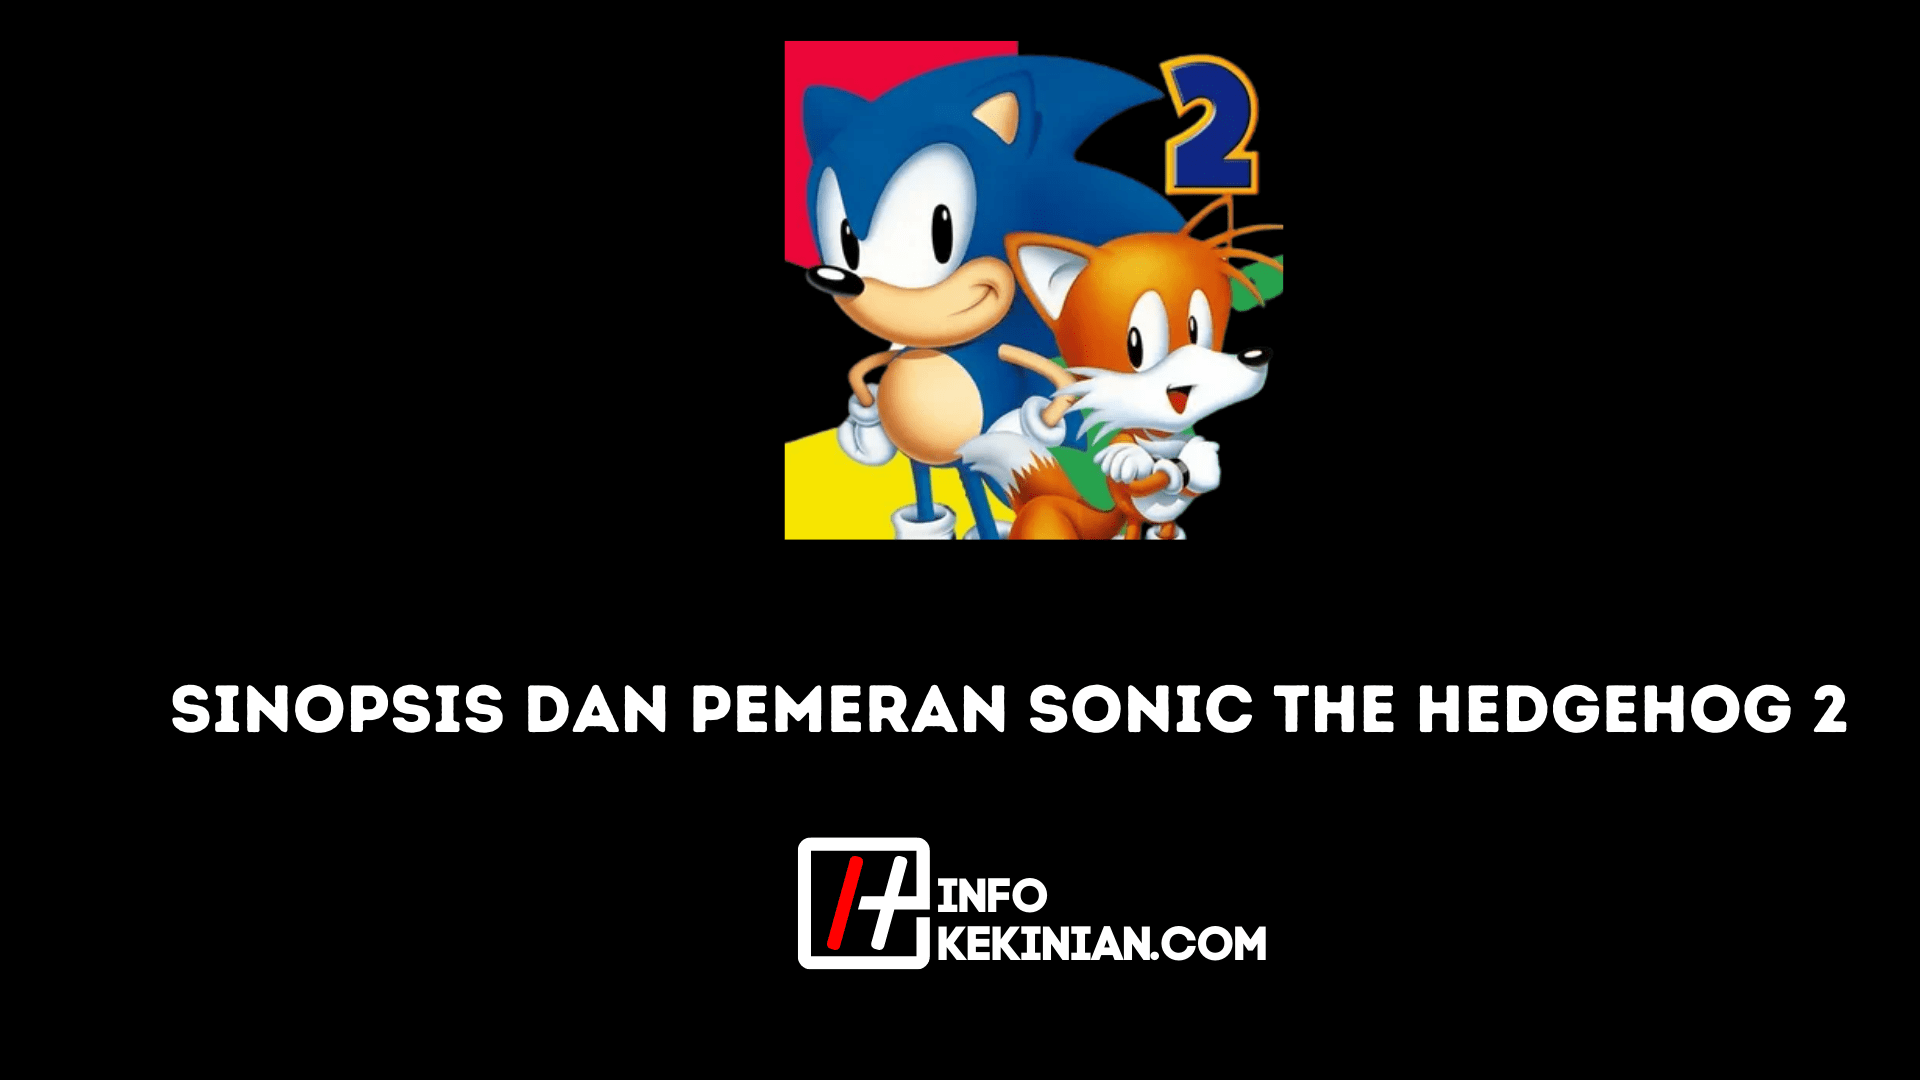 Sinopsis dan Pemeran Sonic the Hedgehog 2